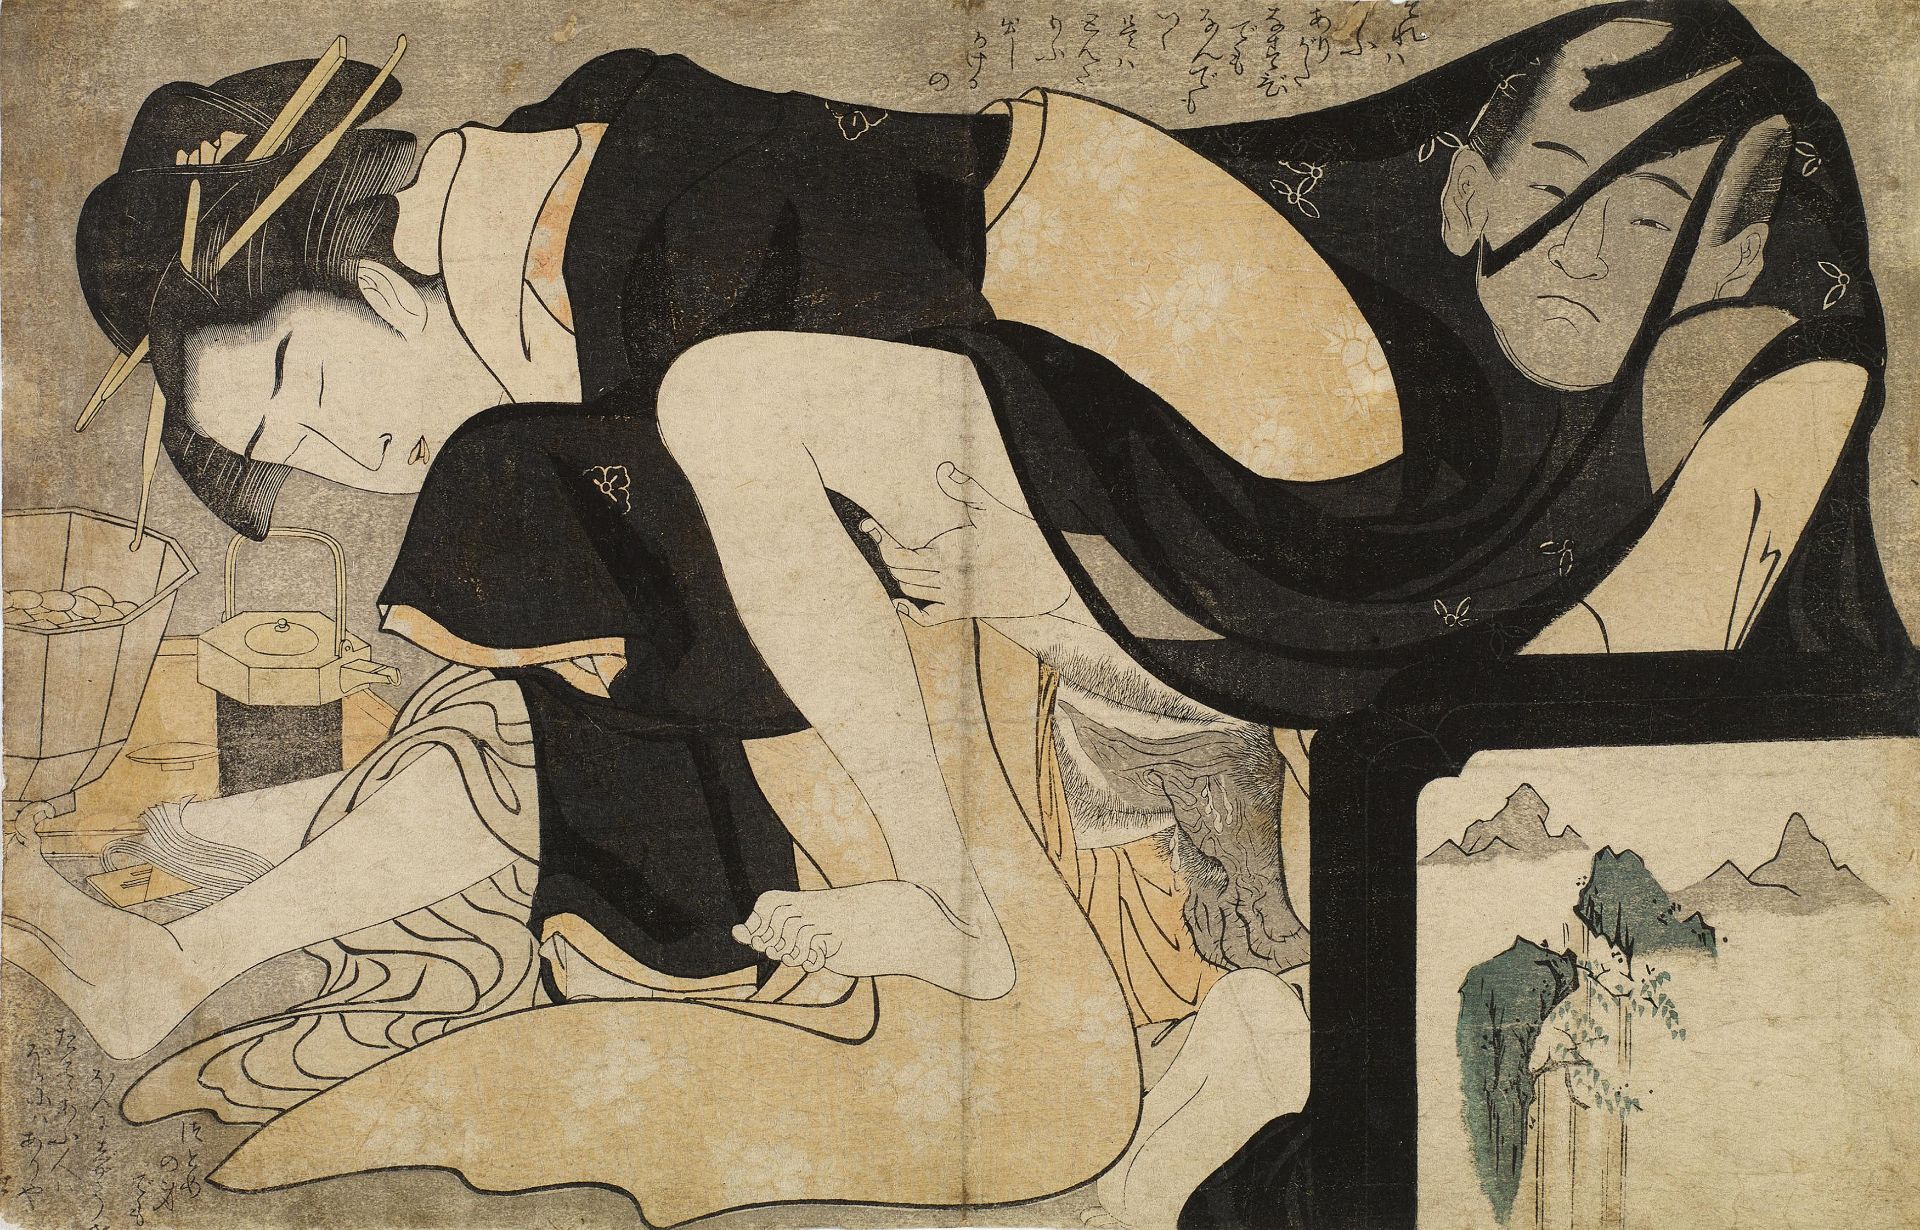 13 Blätter der Shunga-Serie "Fumi no kiyogaki" - Image 13 of 27